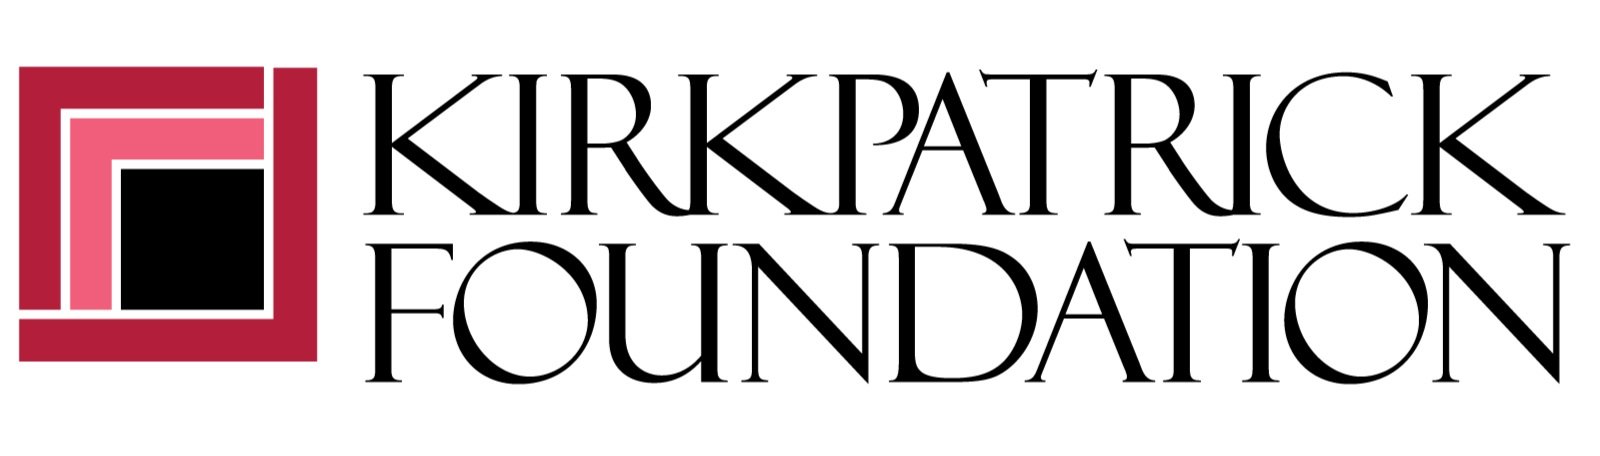 Kirkpatrick-Foundation_web_1920+logo.jpg